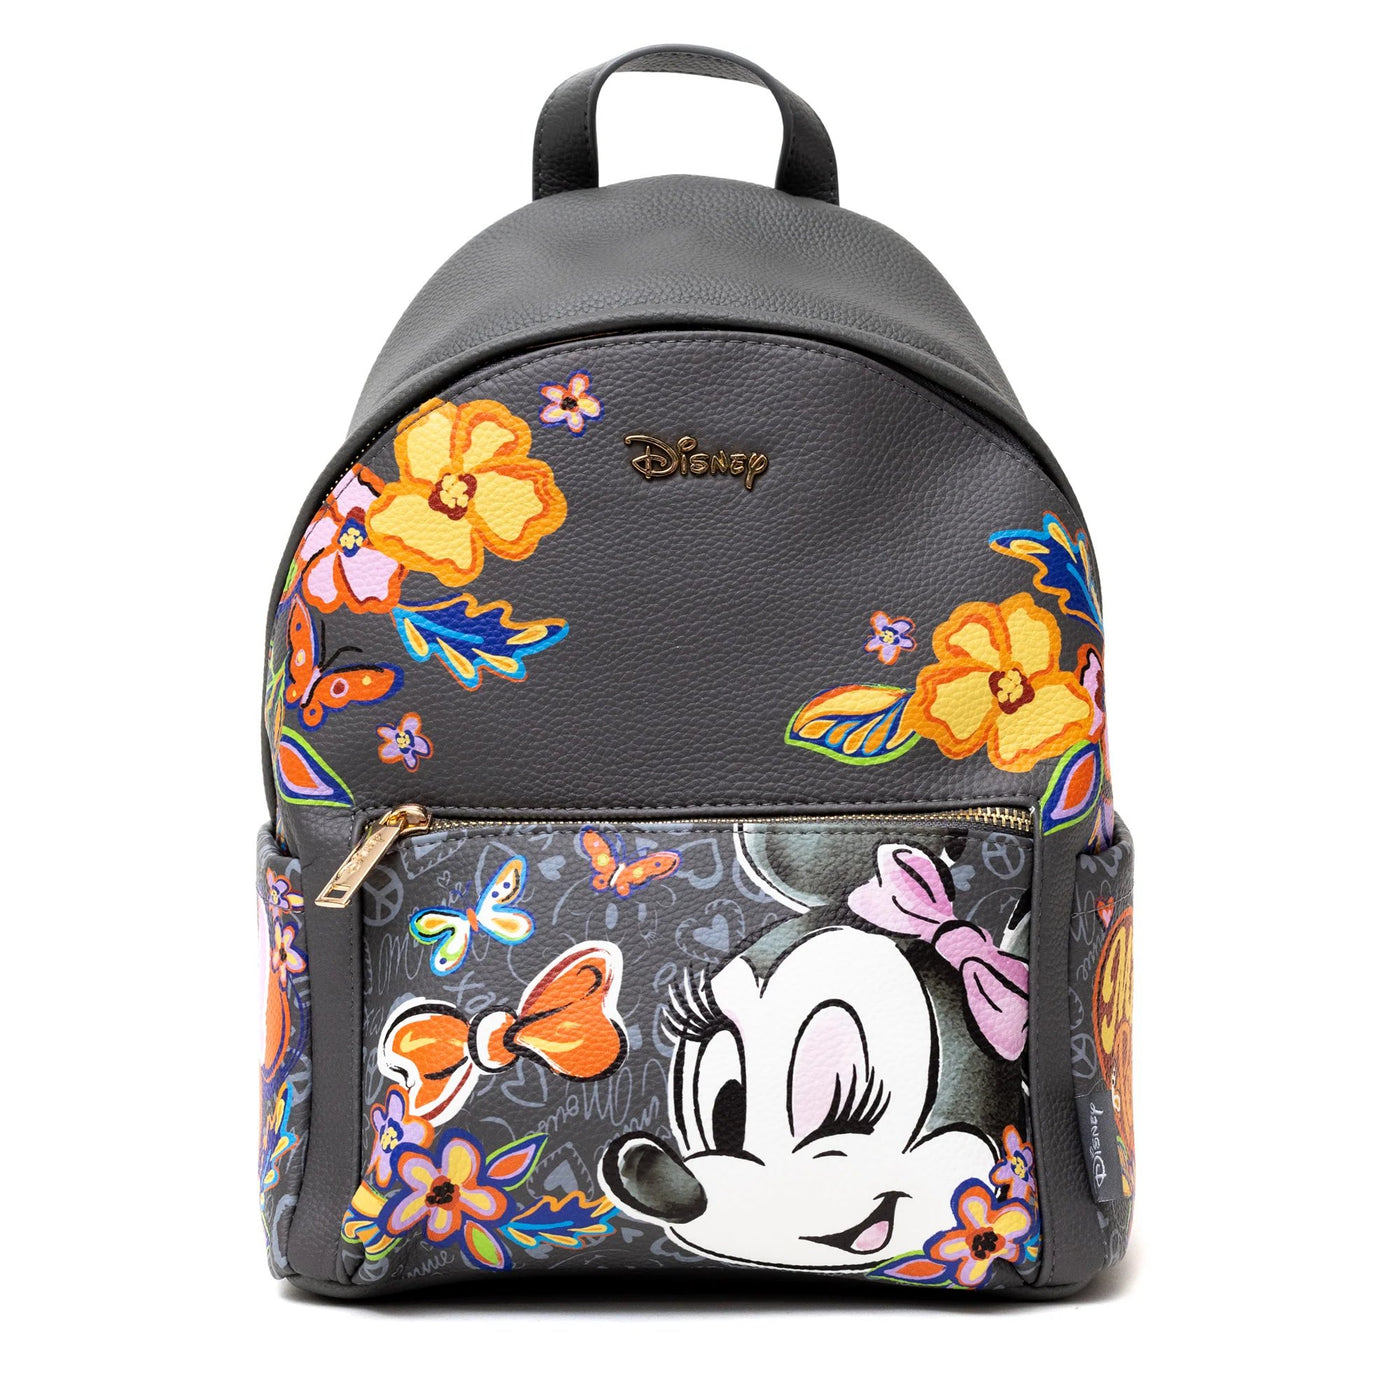 WondaPop Disney Minnie Mouse Floral Print Backpack - Front